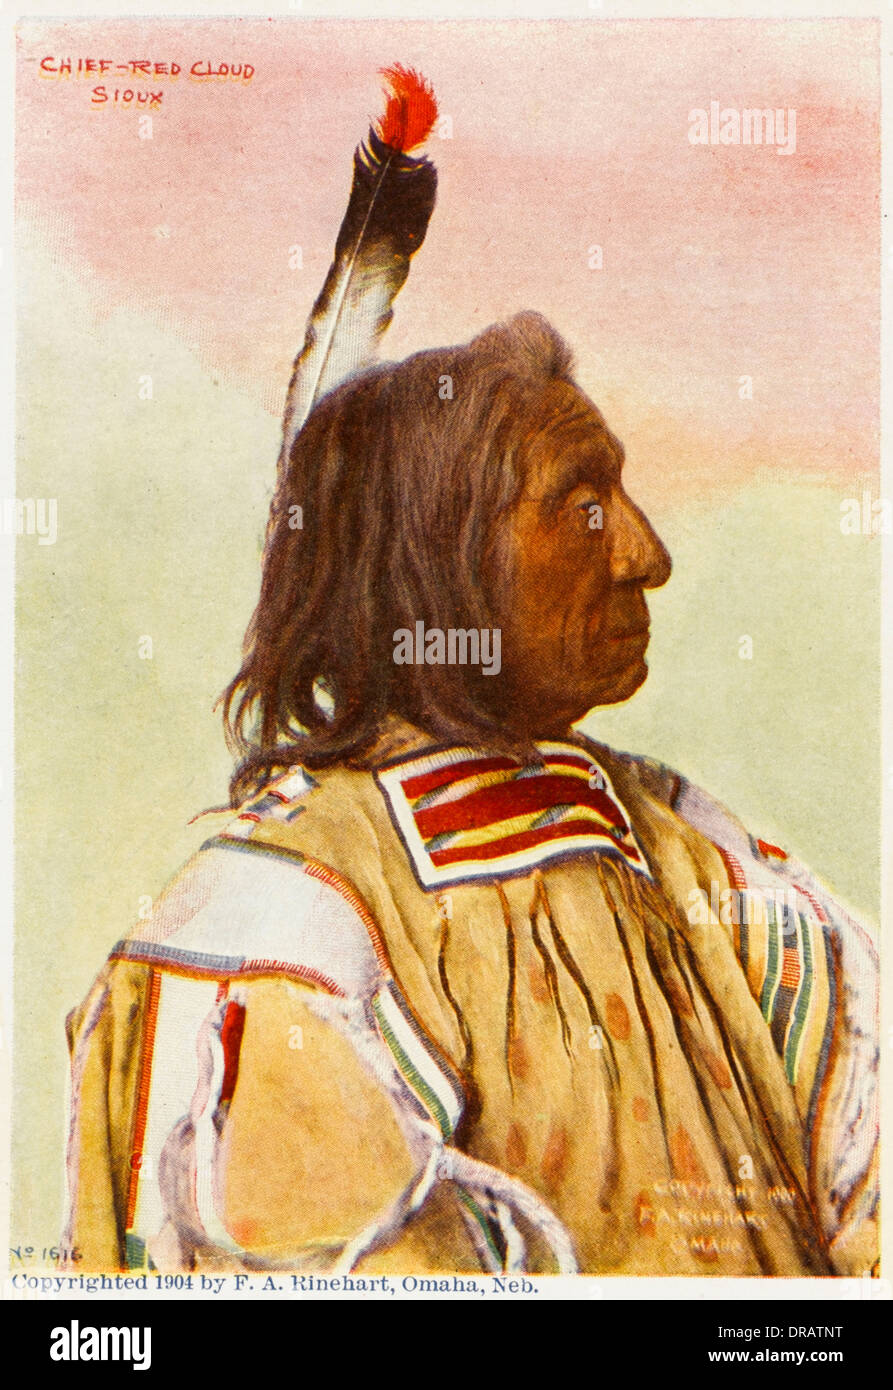 Le chef Red Cloud - Chef Sioux Banque D'Images